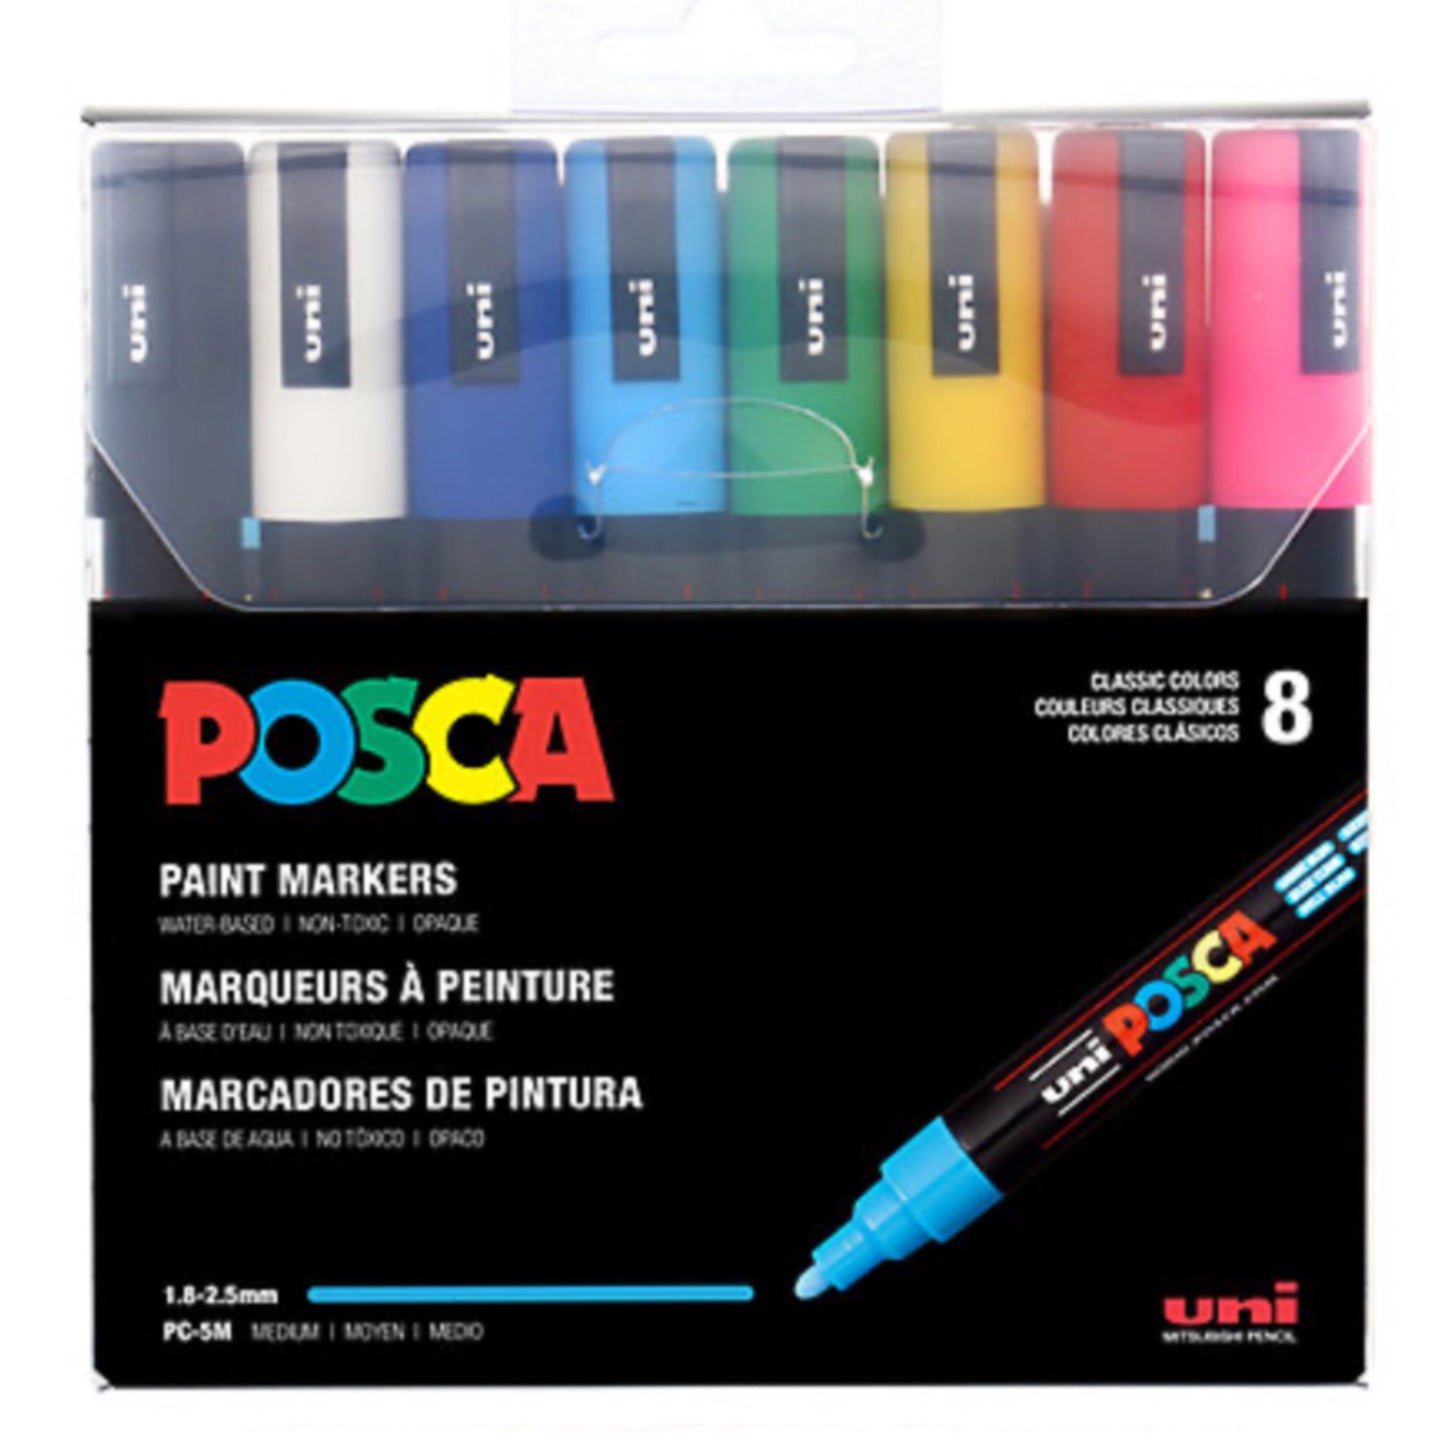 POSCA Paint Marker 8 Color Sets - by POSCA - K. A. Artist Shop